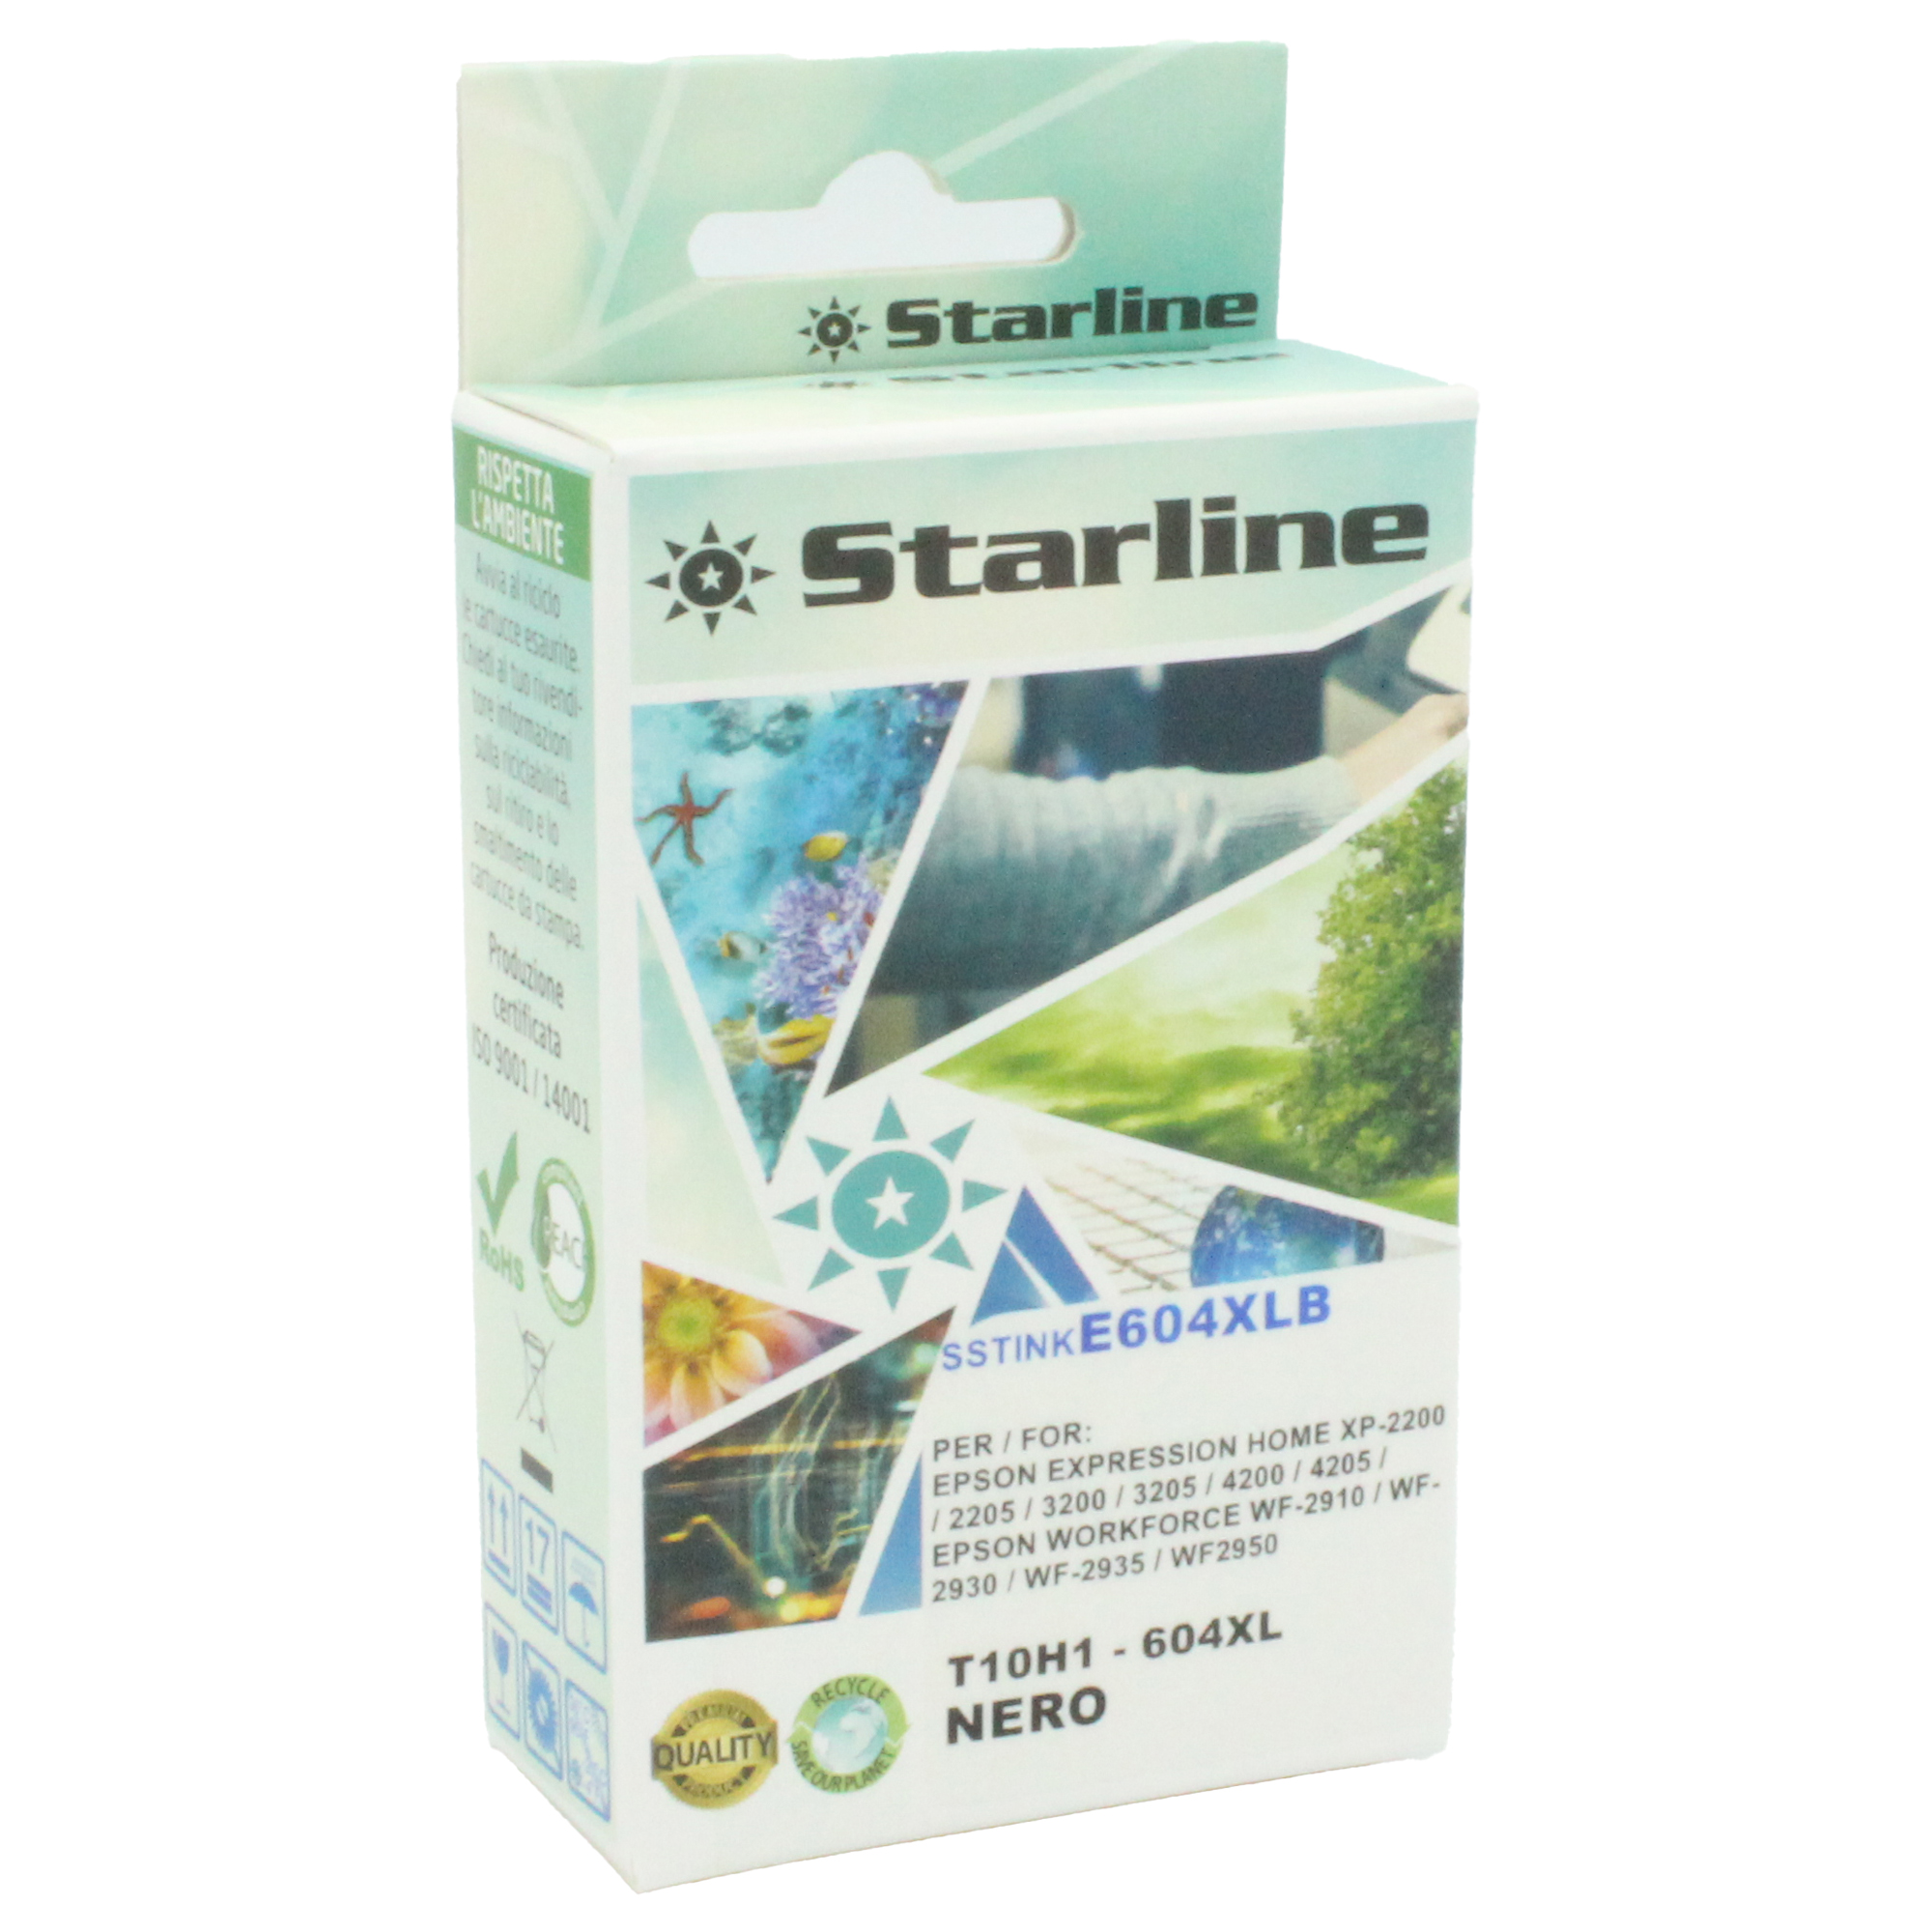 Starline Cartuccia Nero 604XL_Ananas Pag 500